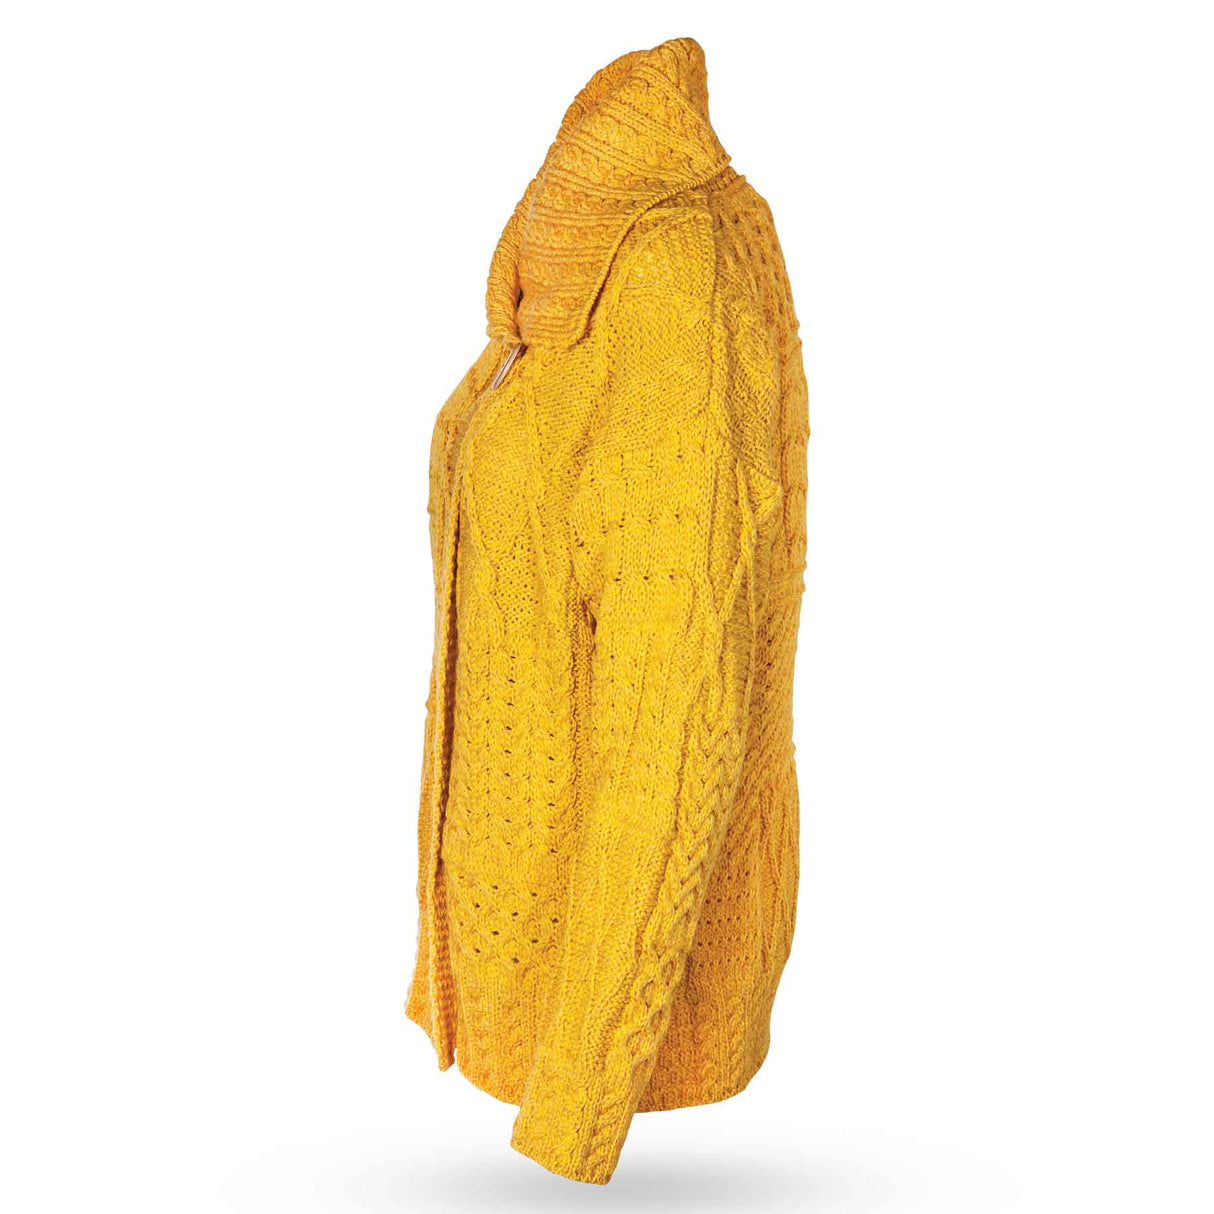 Aran Knit Patchwork Cardigan - Mustard Yellow - Creative Irish Gifts